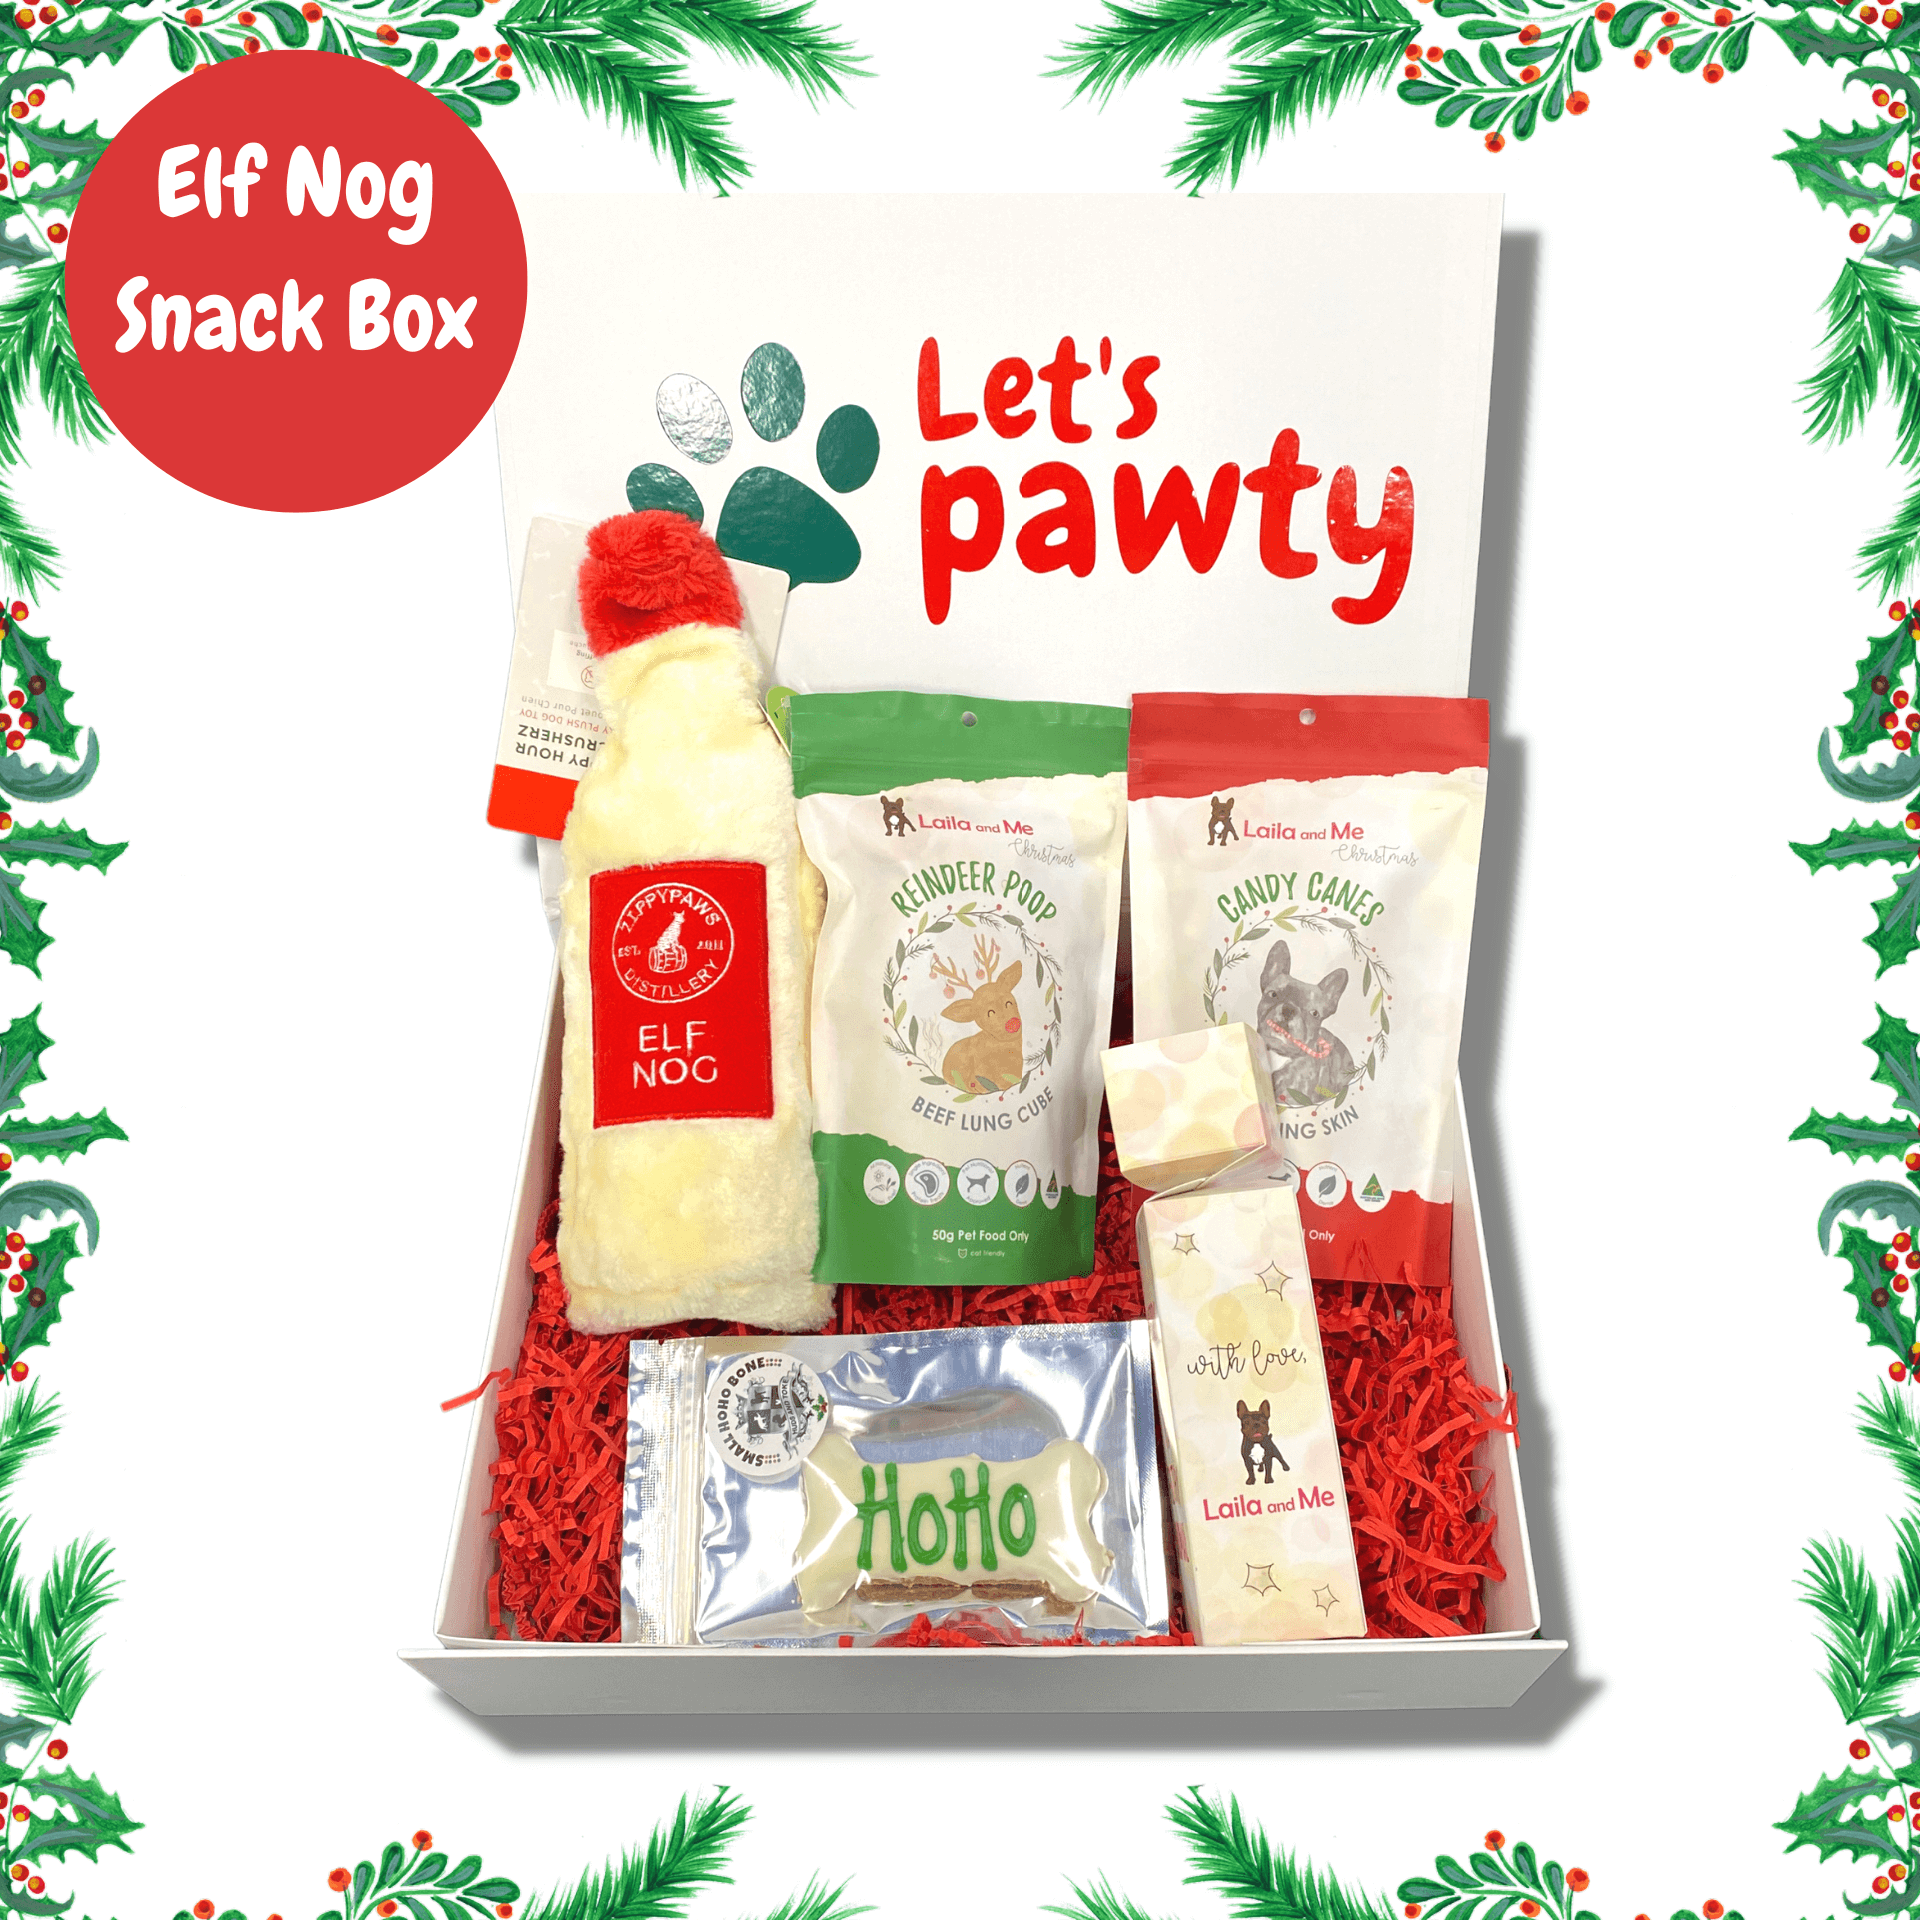 Personalised Dog Gift Box, let's pawty snacks, dog toys.